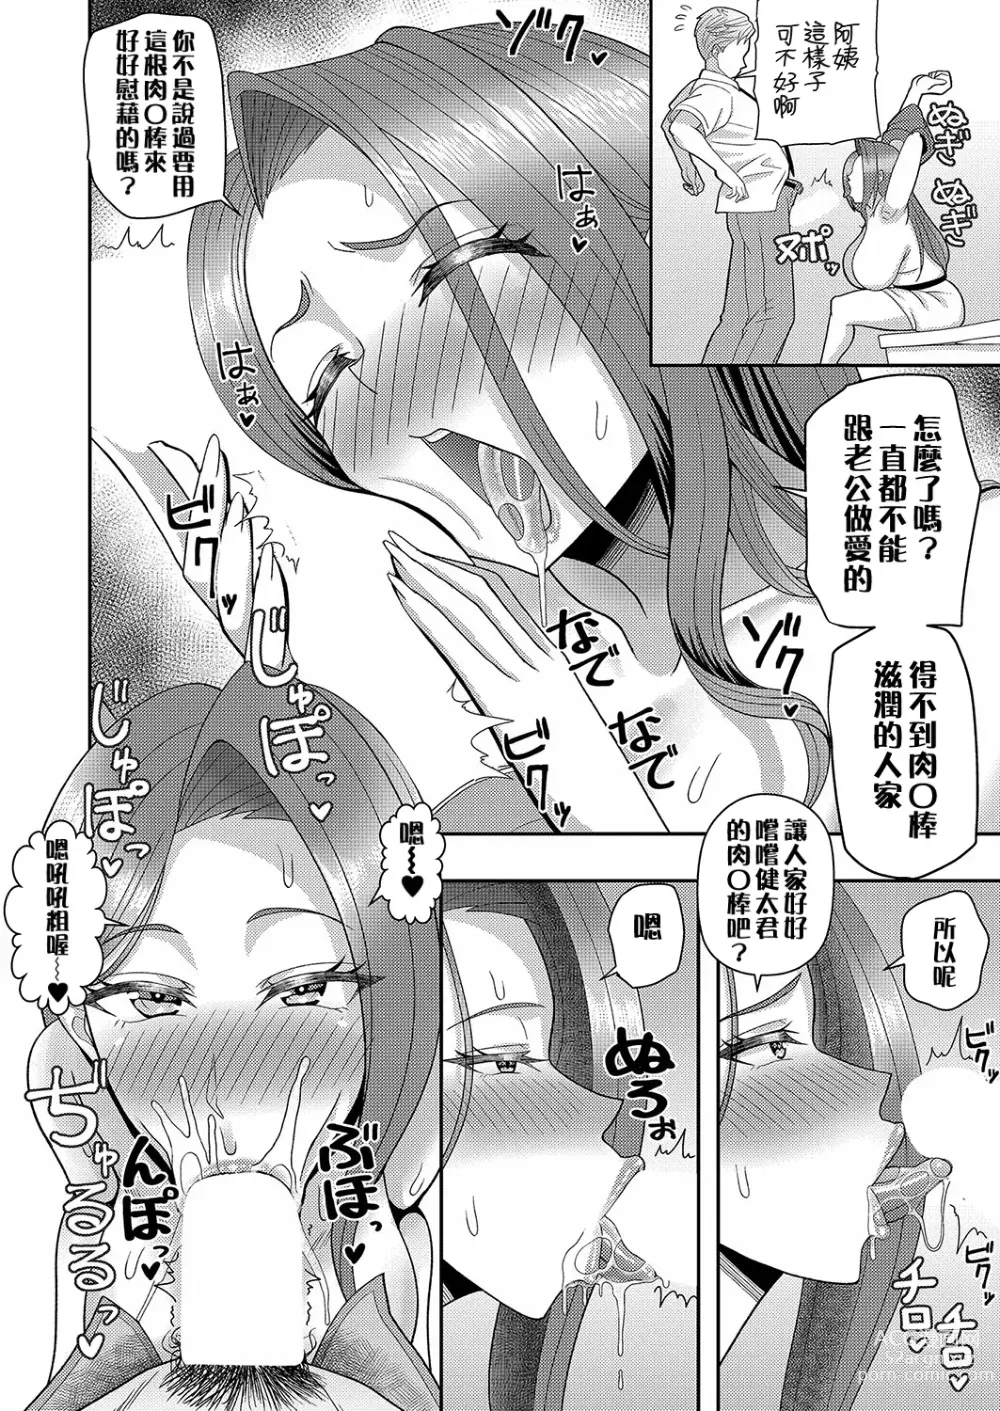 Page 6 of manga Kanojo no Mama to no Kankei